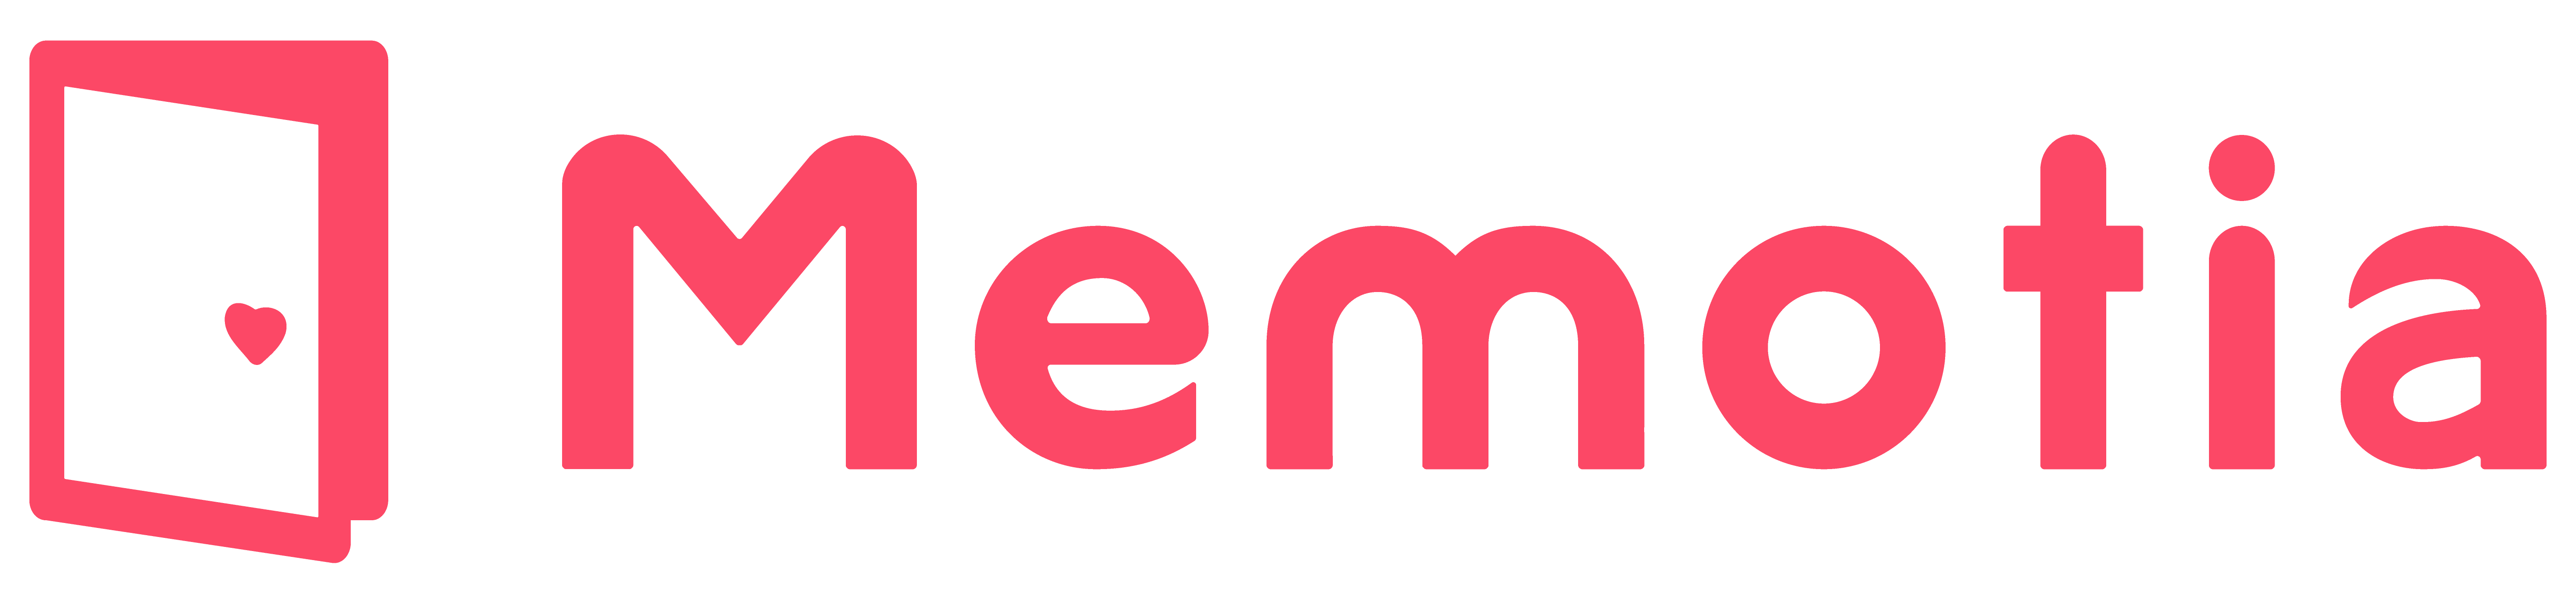 memotia_logo